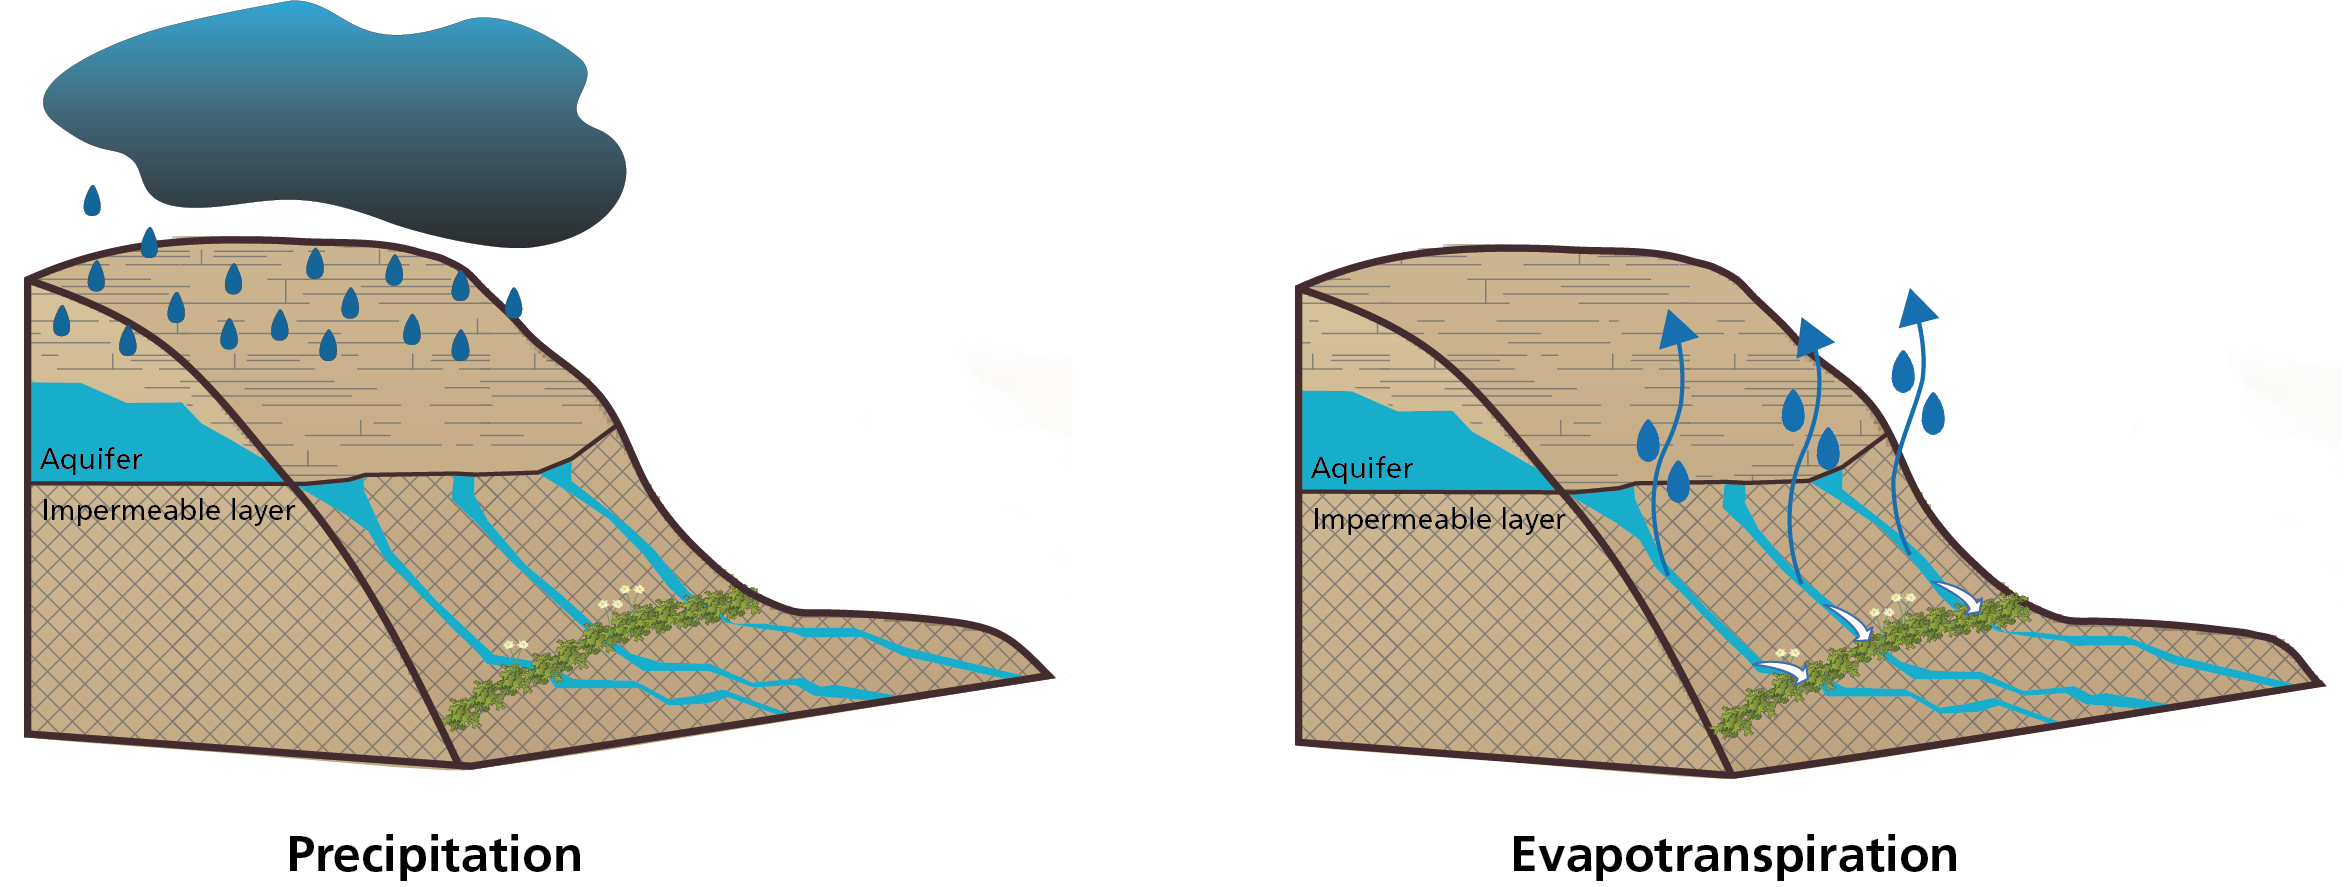 Conceptual diagrams showing precipitation and potential evapotranspiration processes at springs.